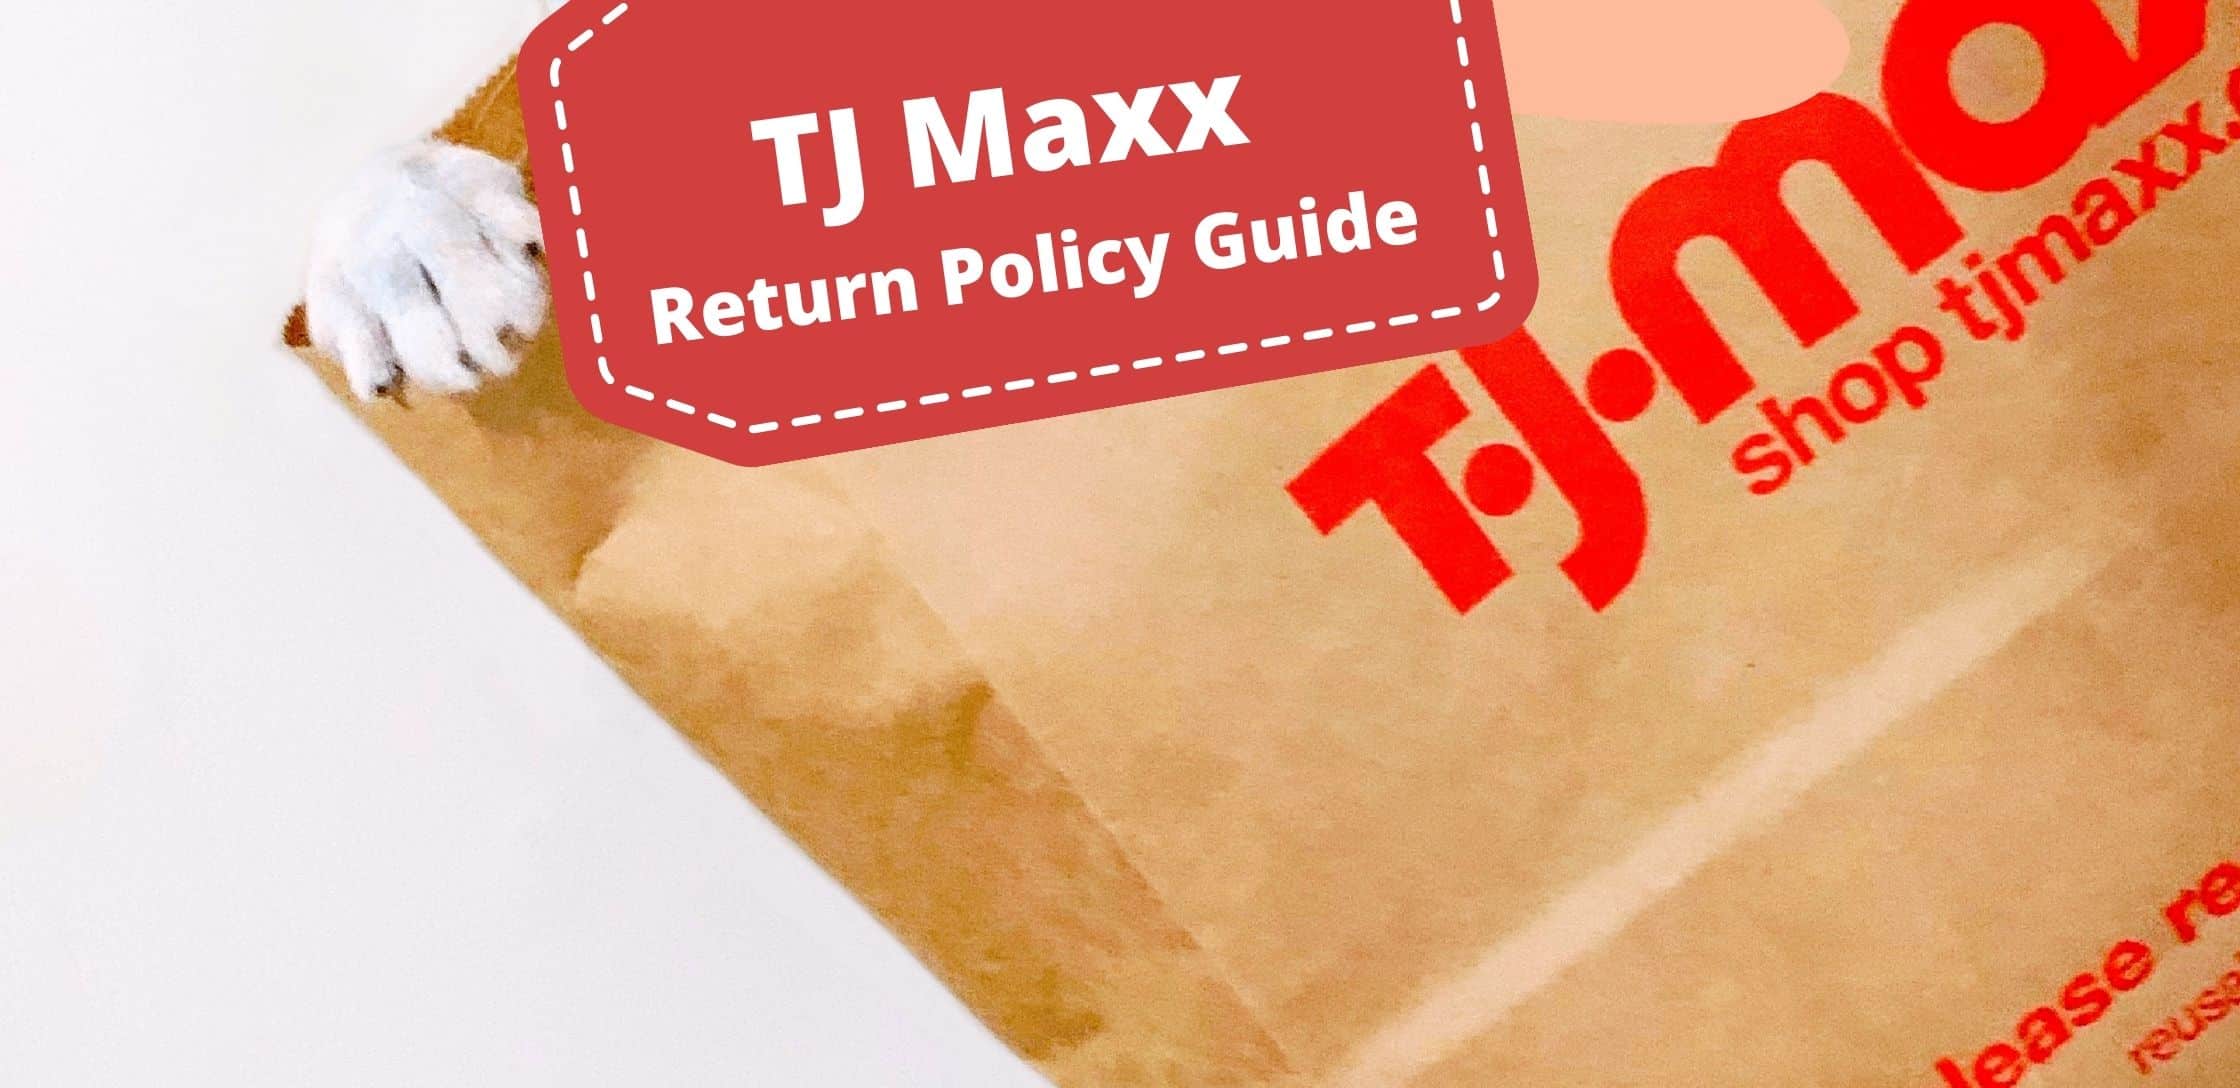 TJ Maxx Return Policy Guide